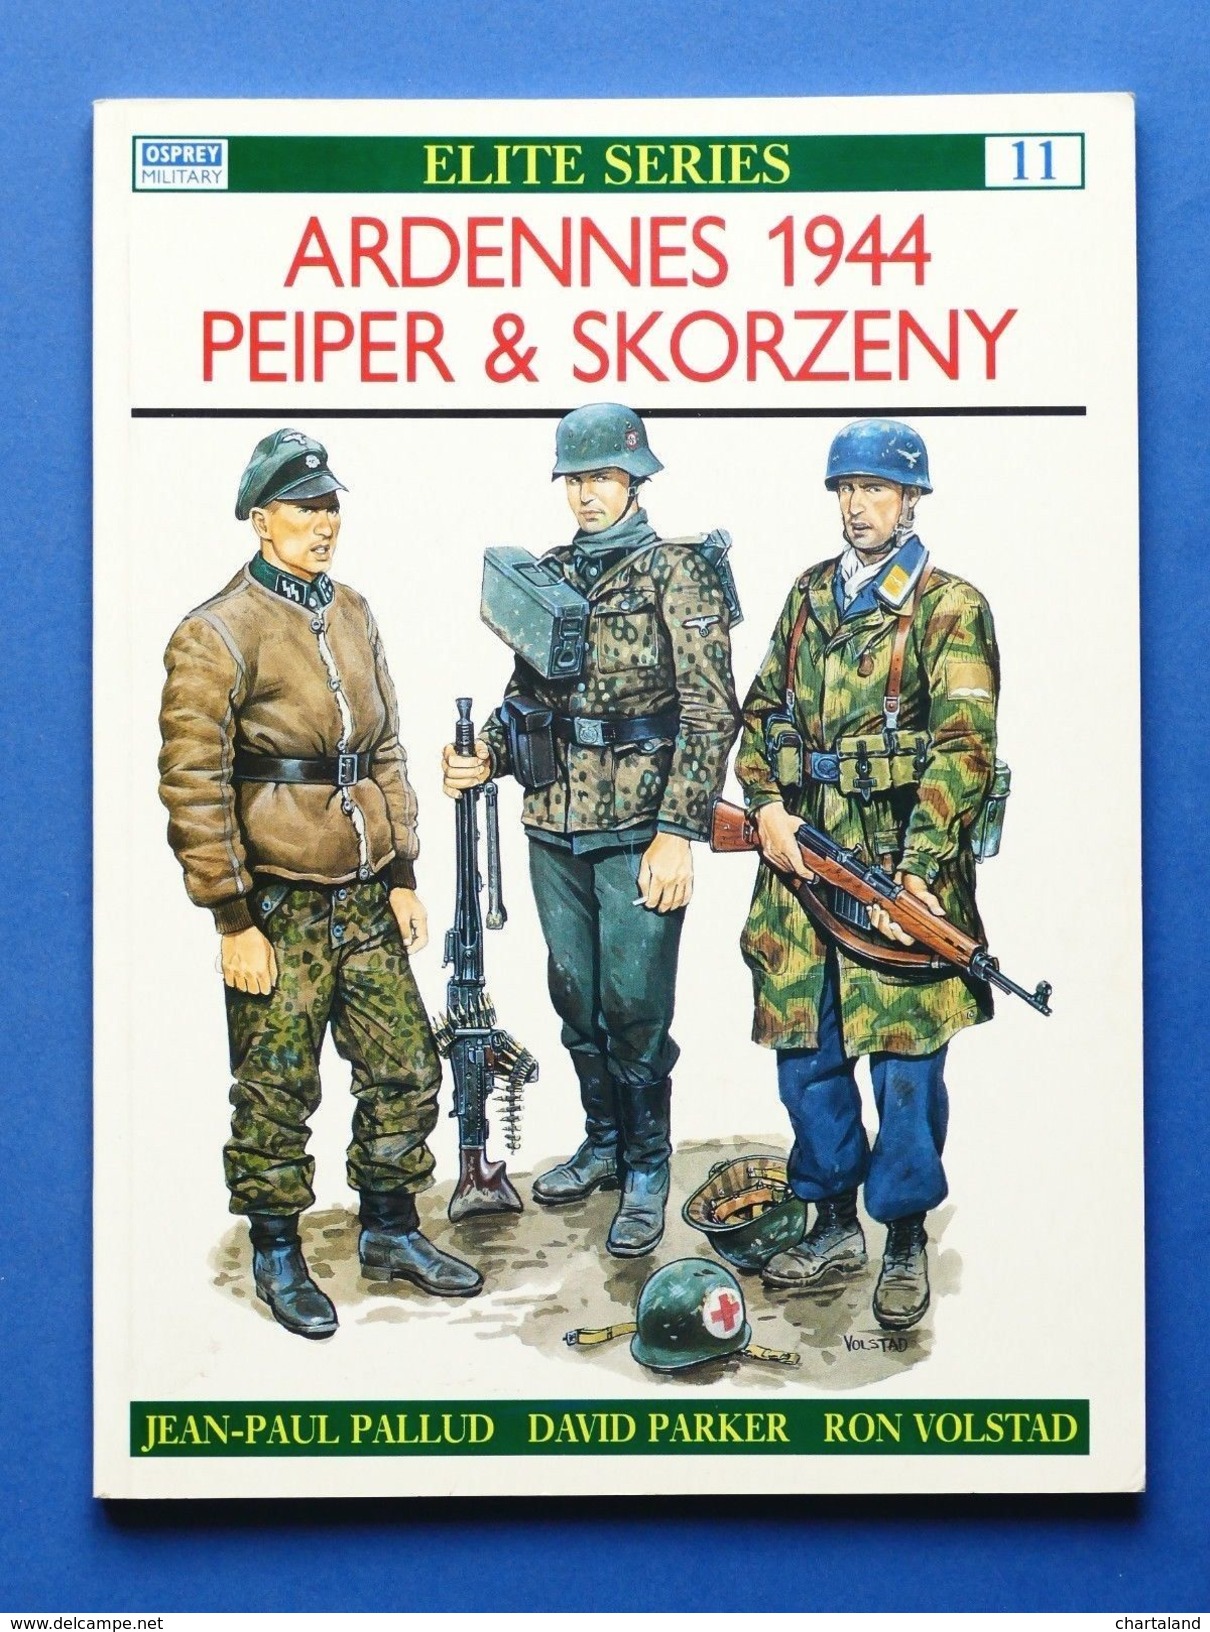 Militaria Uniformi - Ardennes 1944 Peiper & Skorzeny - Elite Series N° 11 - 1993 - Documenti